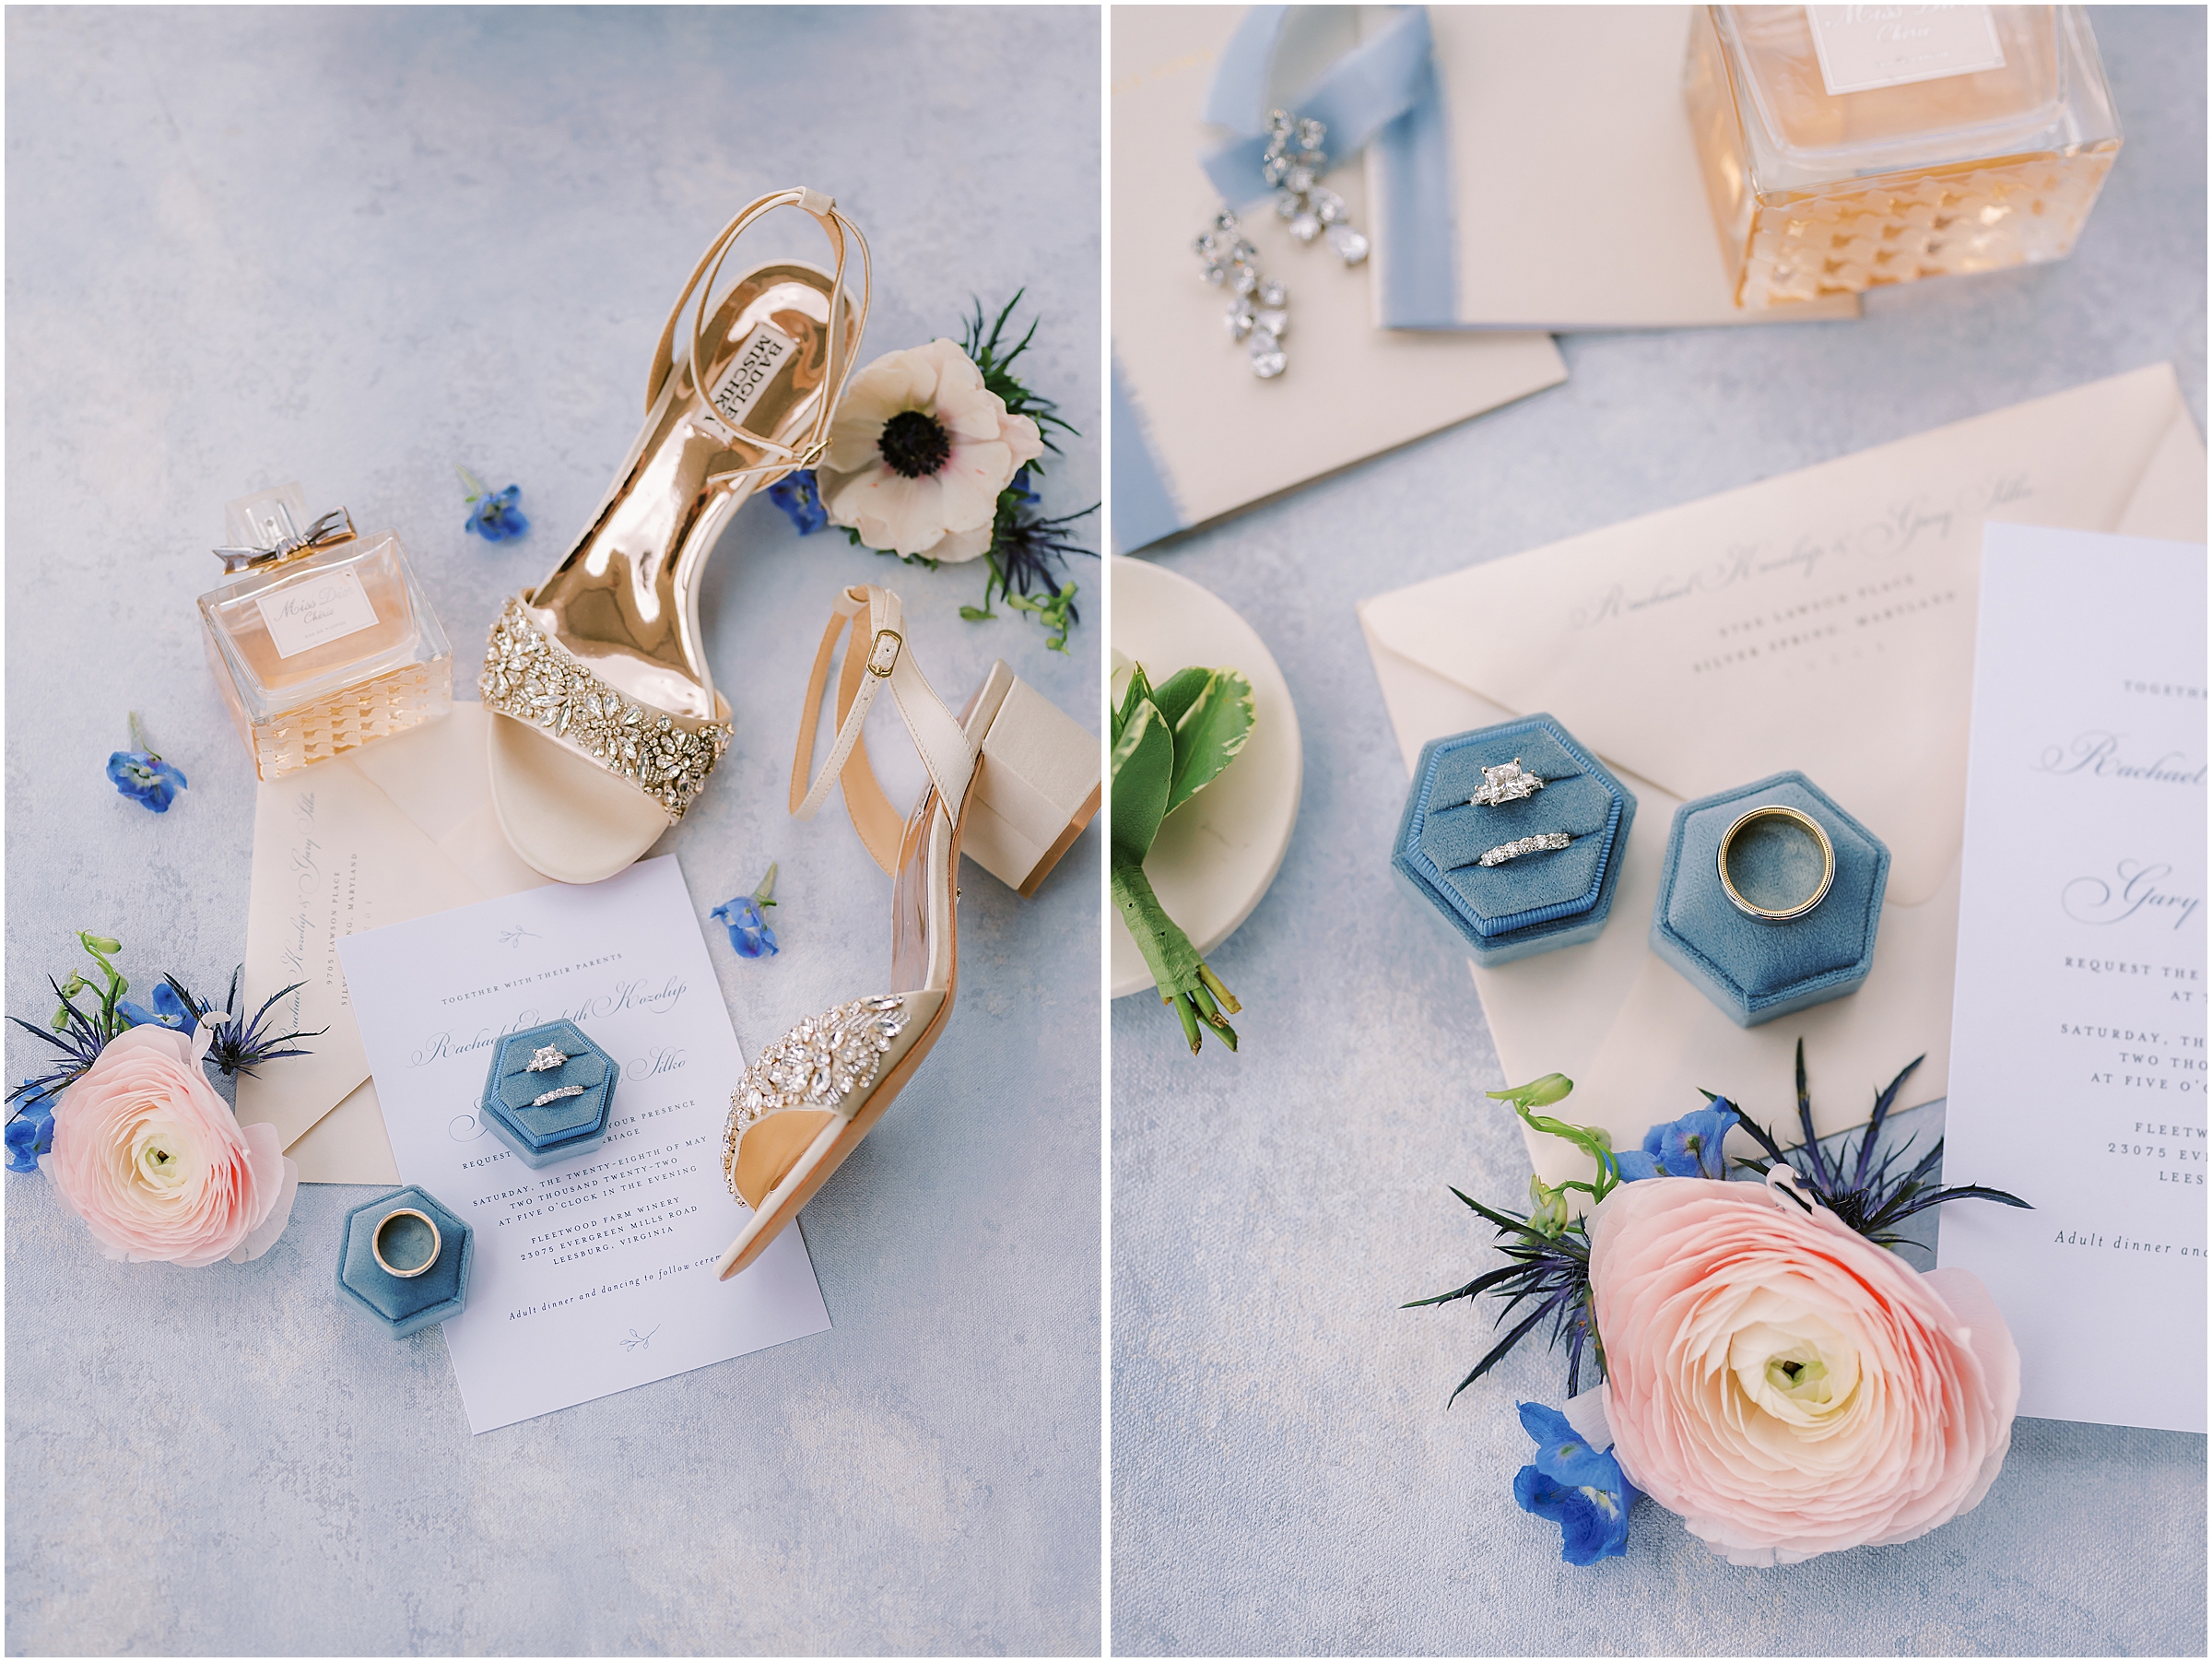 Wedding details - Rings, invitations, heels and perfume